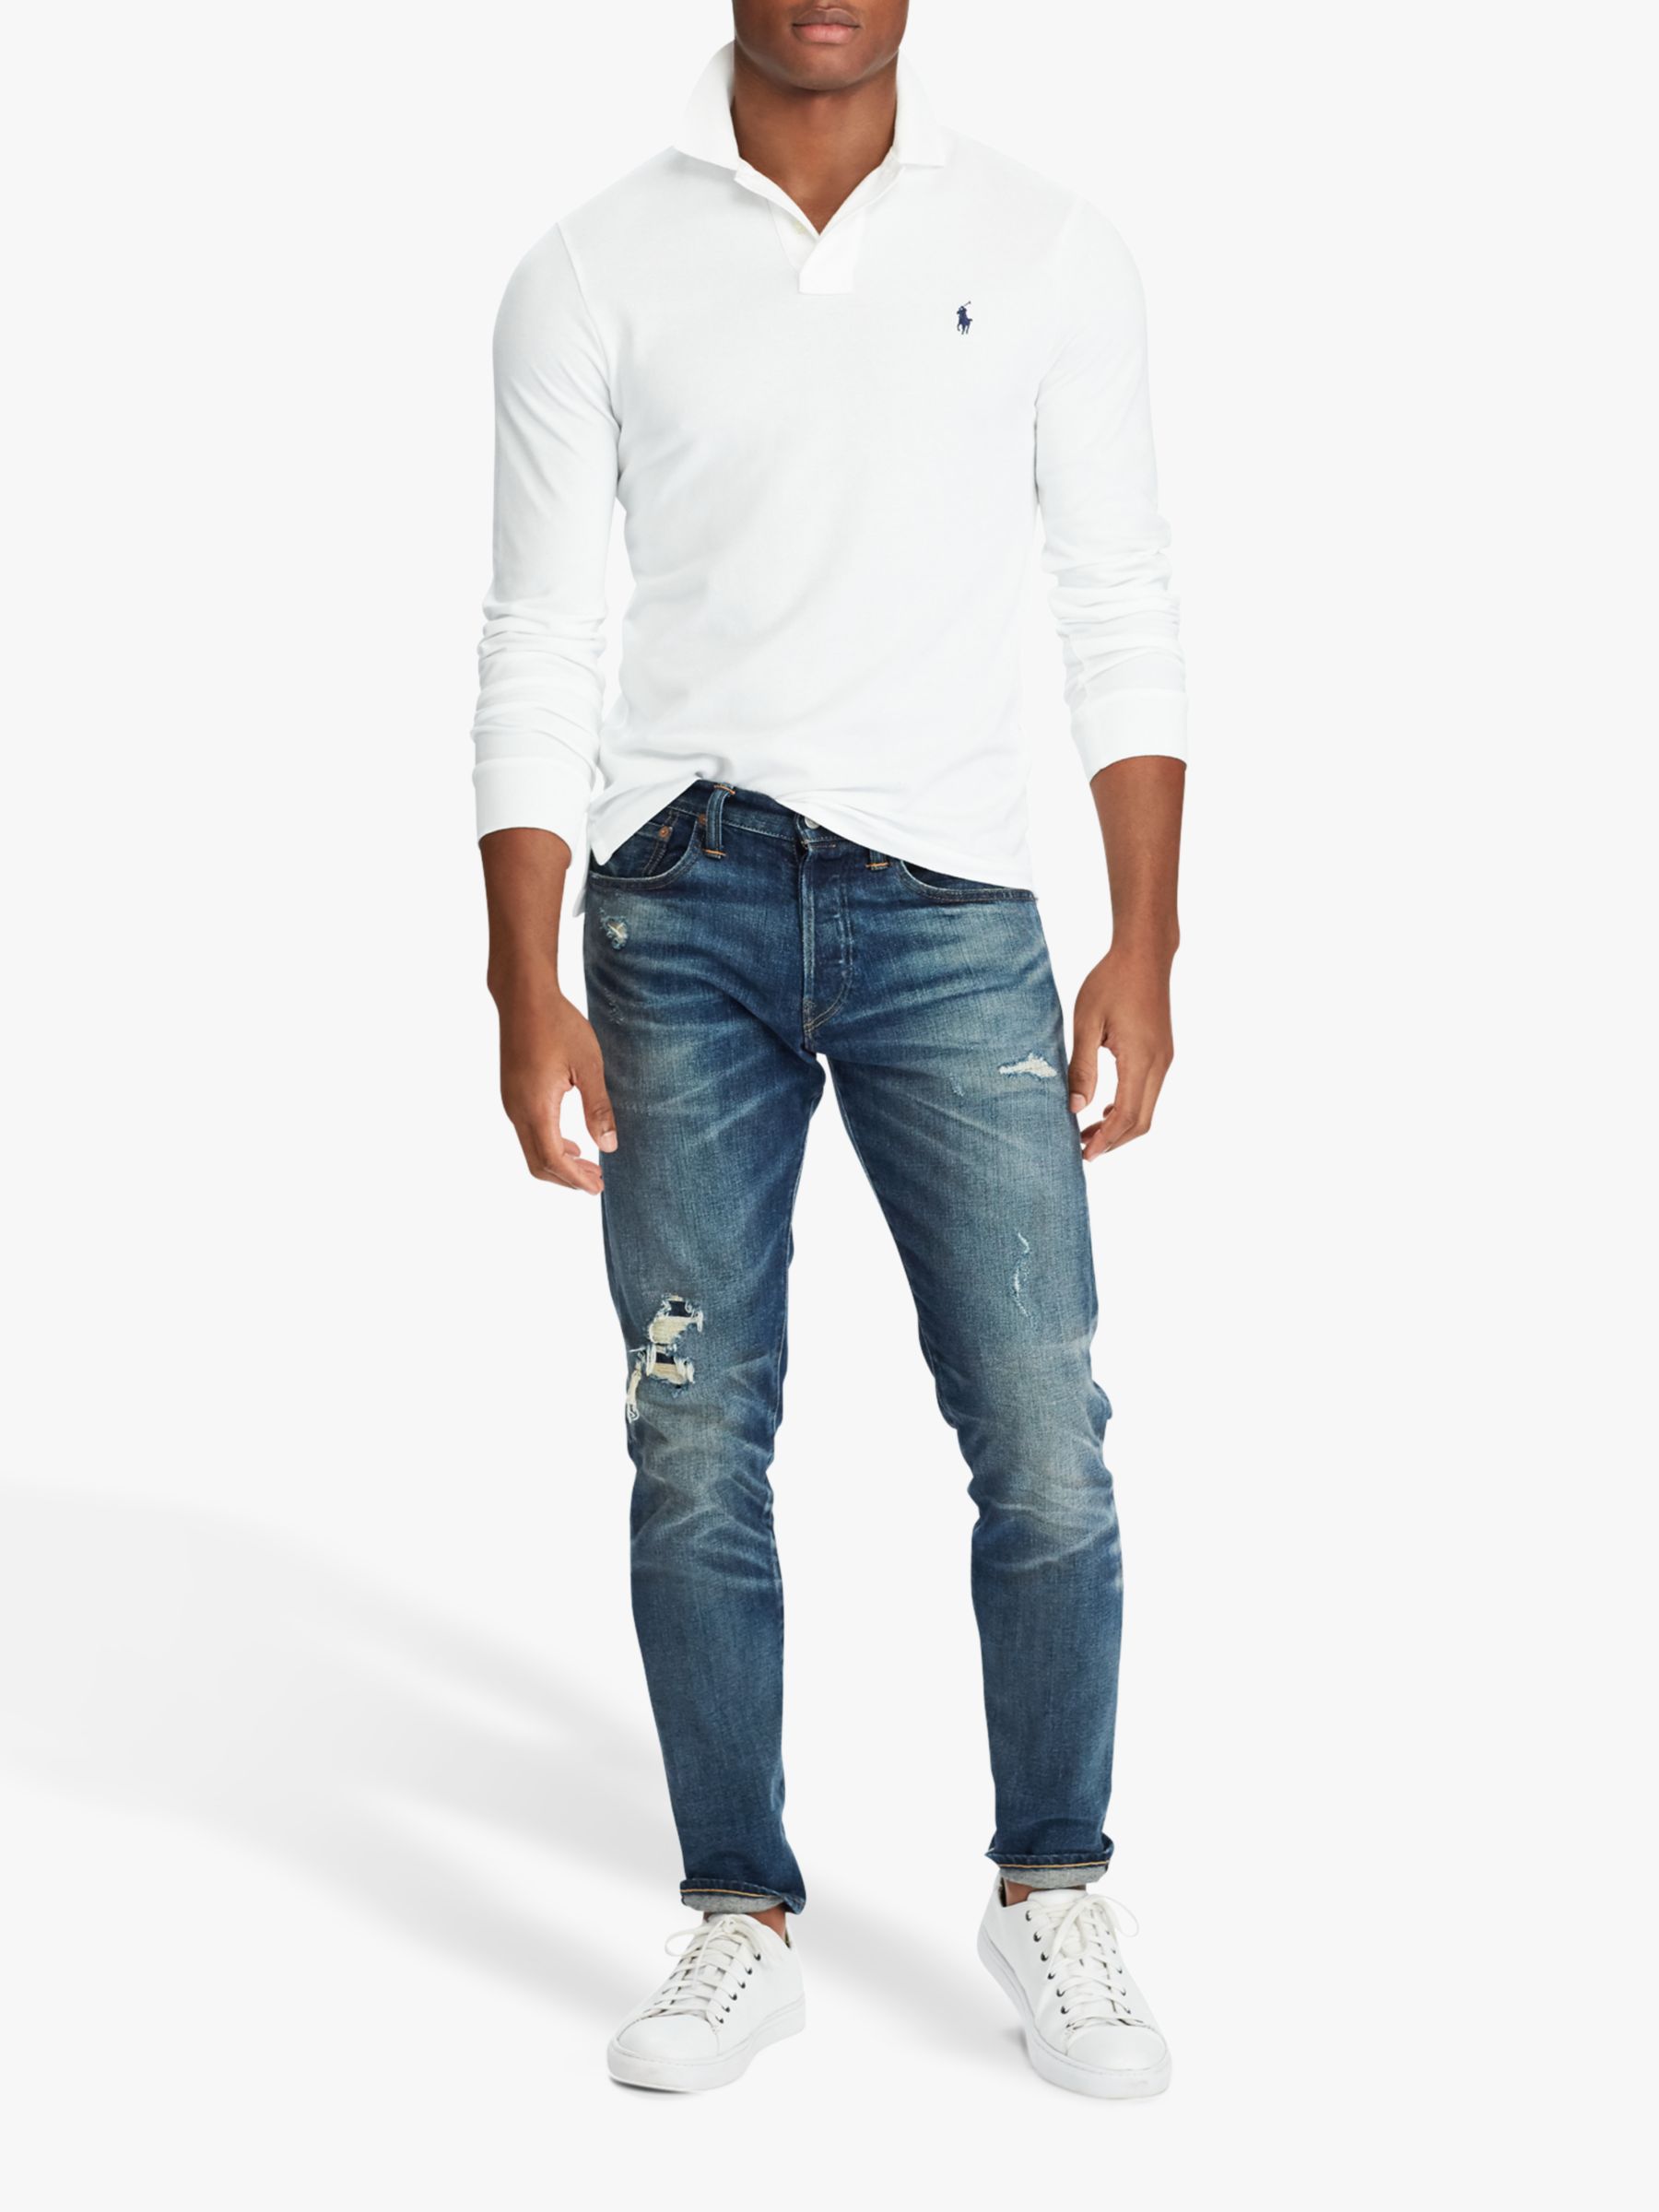 Polo Ralph Lauren Custom Slim Fit Long Sleeve Polo Shirt, White, S